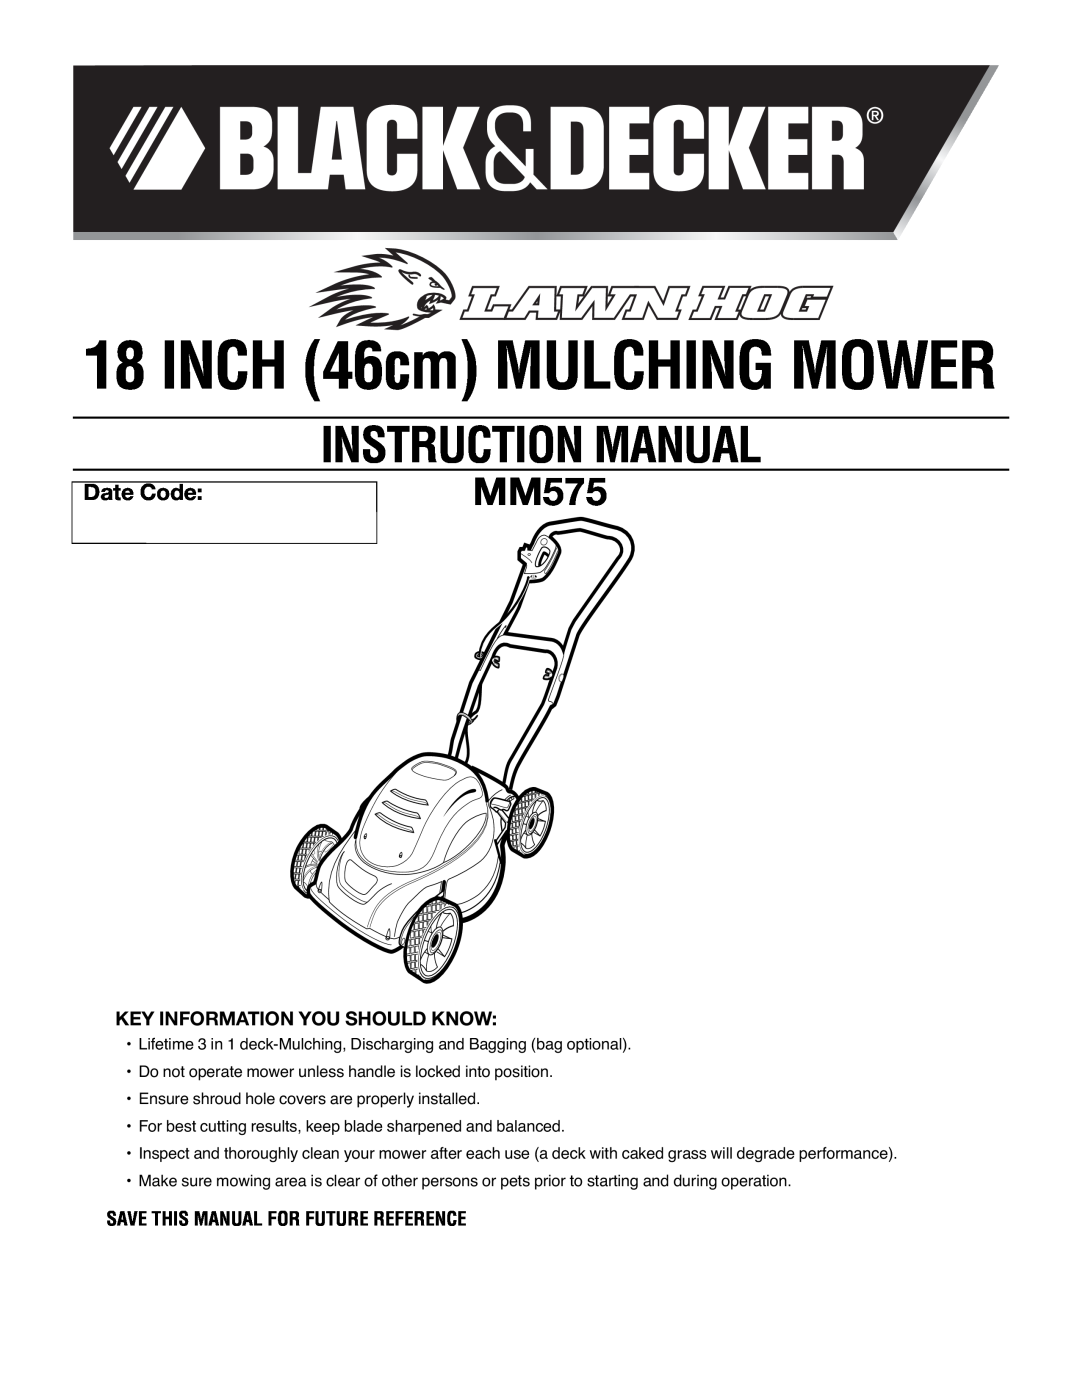 Black & Decker MM575 instruction manual Instruction Manual, Date Code, Key Information You Should Know 